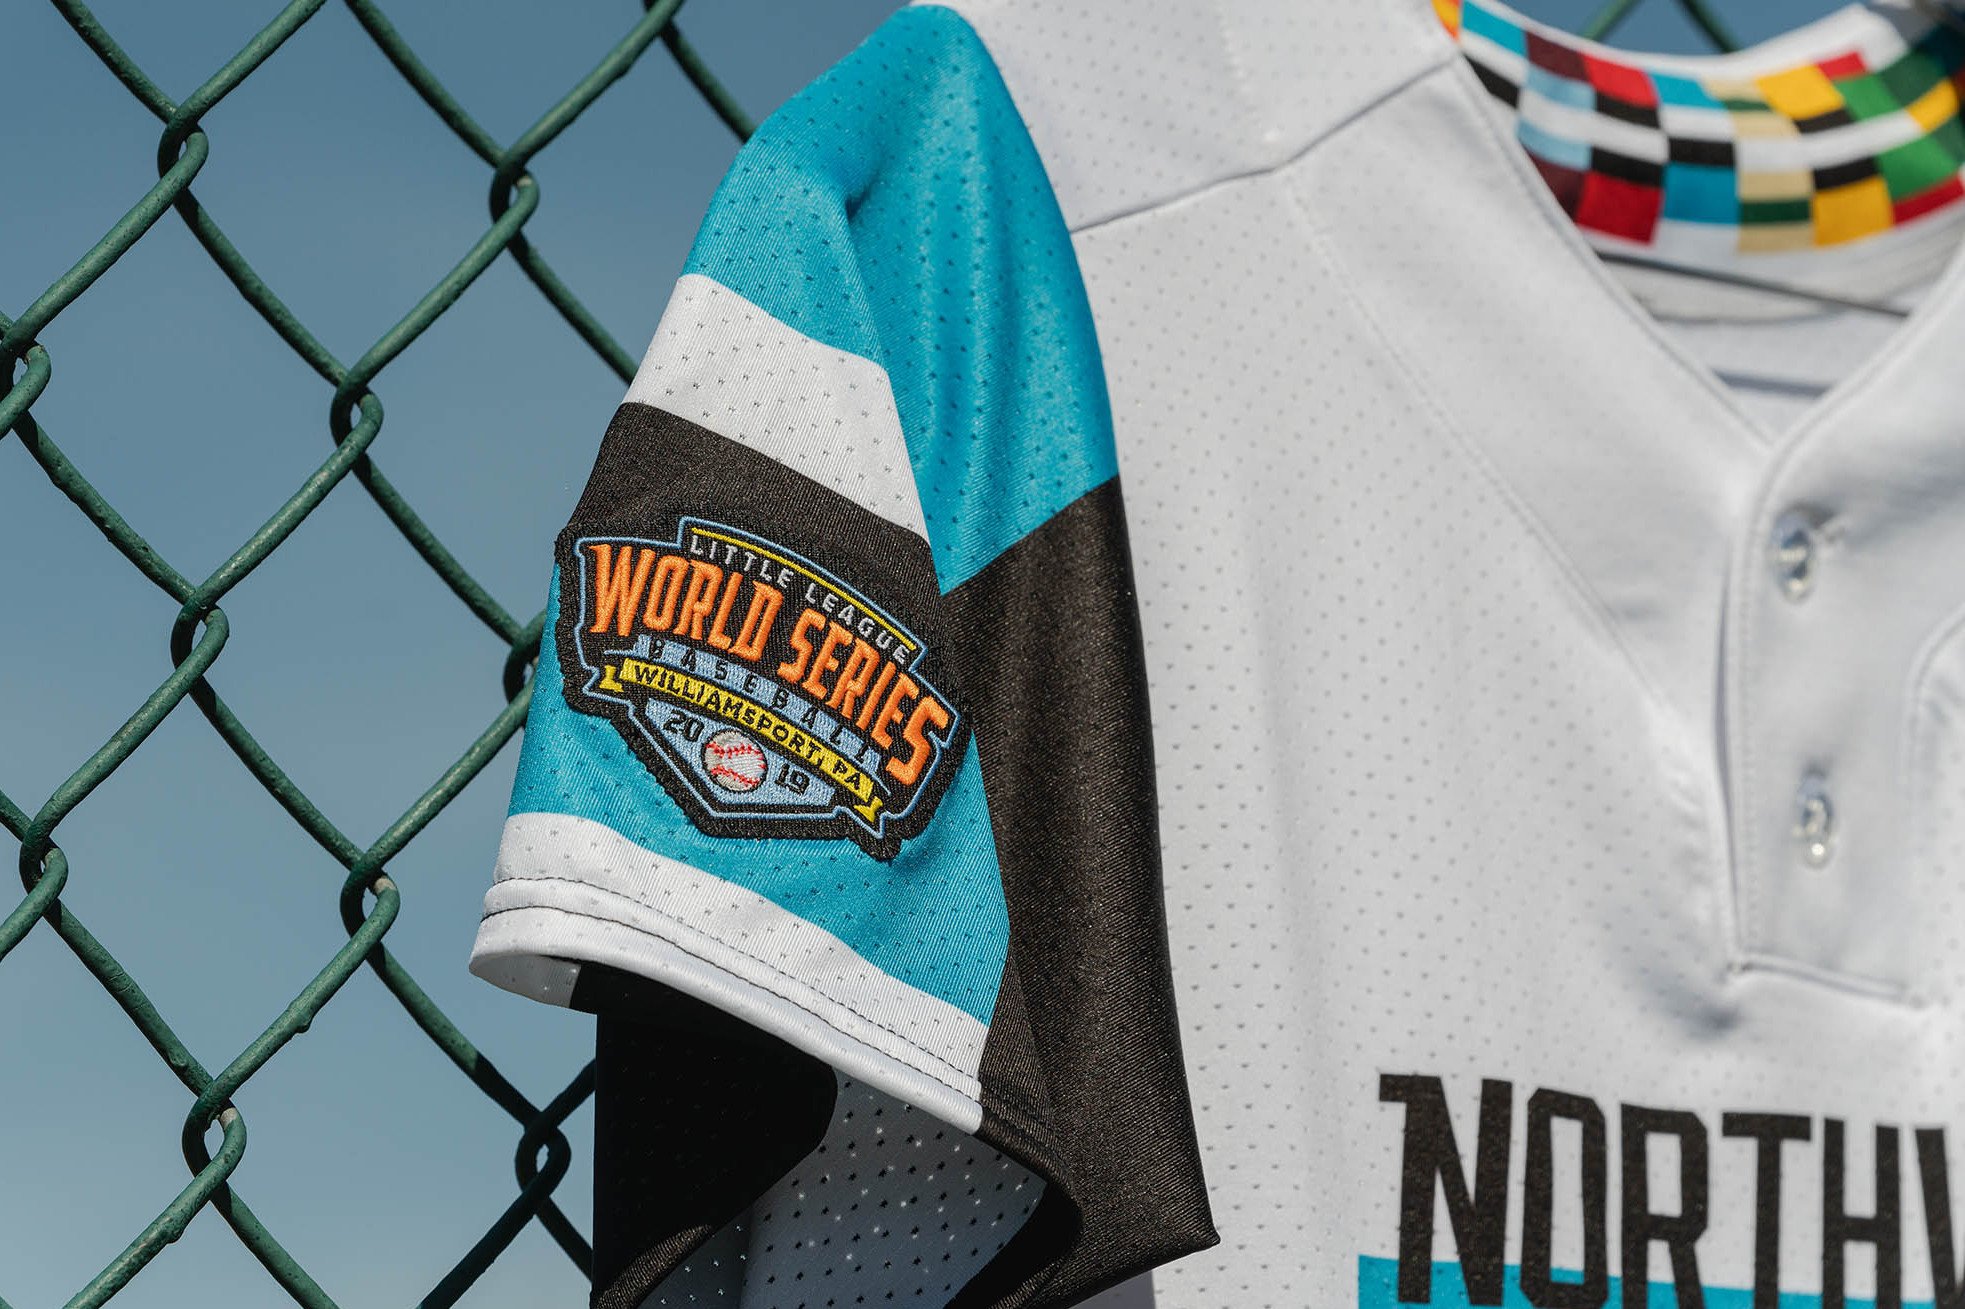 Little League® World Series Uniforms and Team Colors Unveiled for 2021 - Little  League